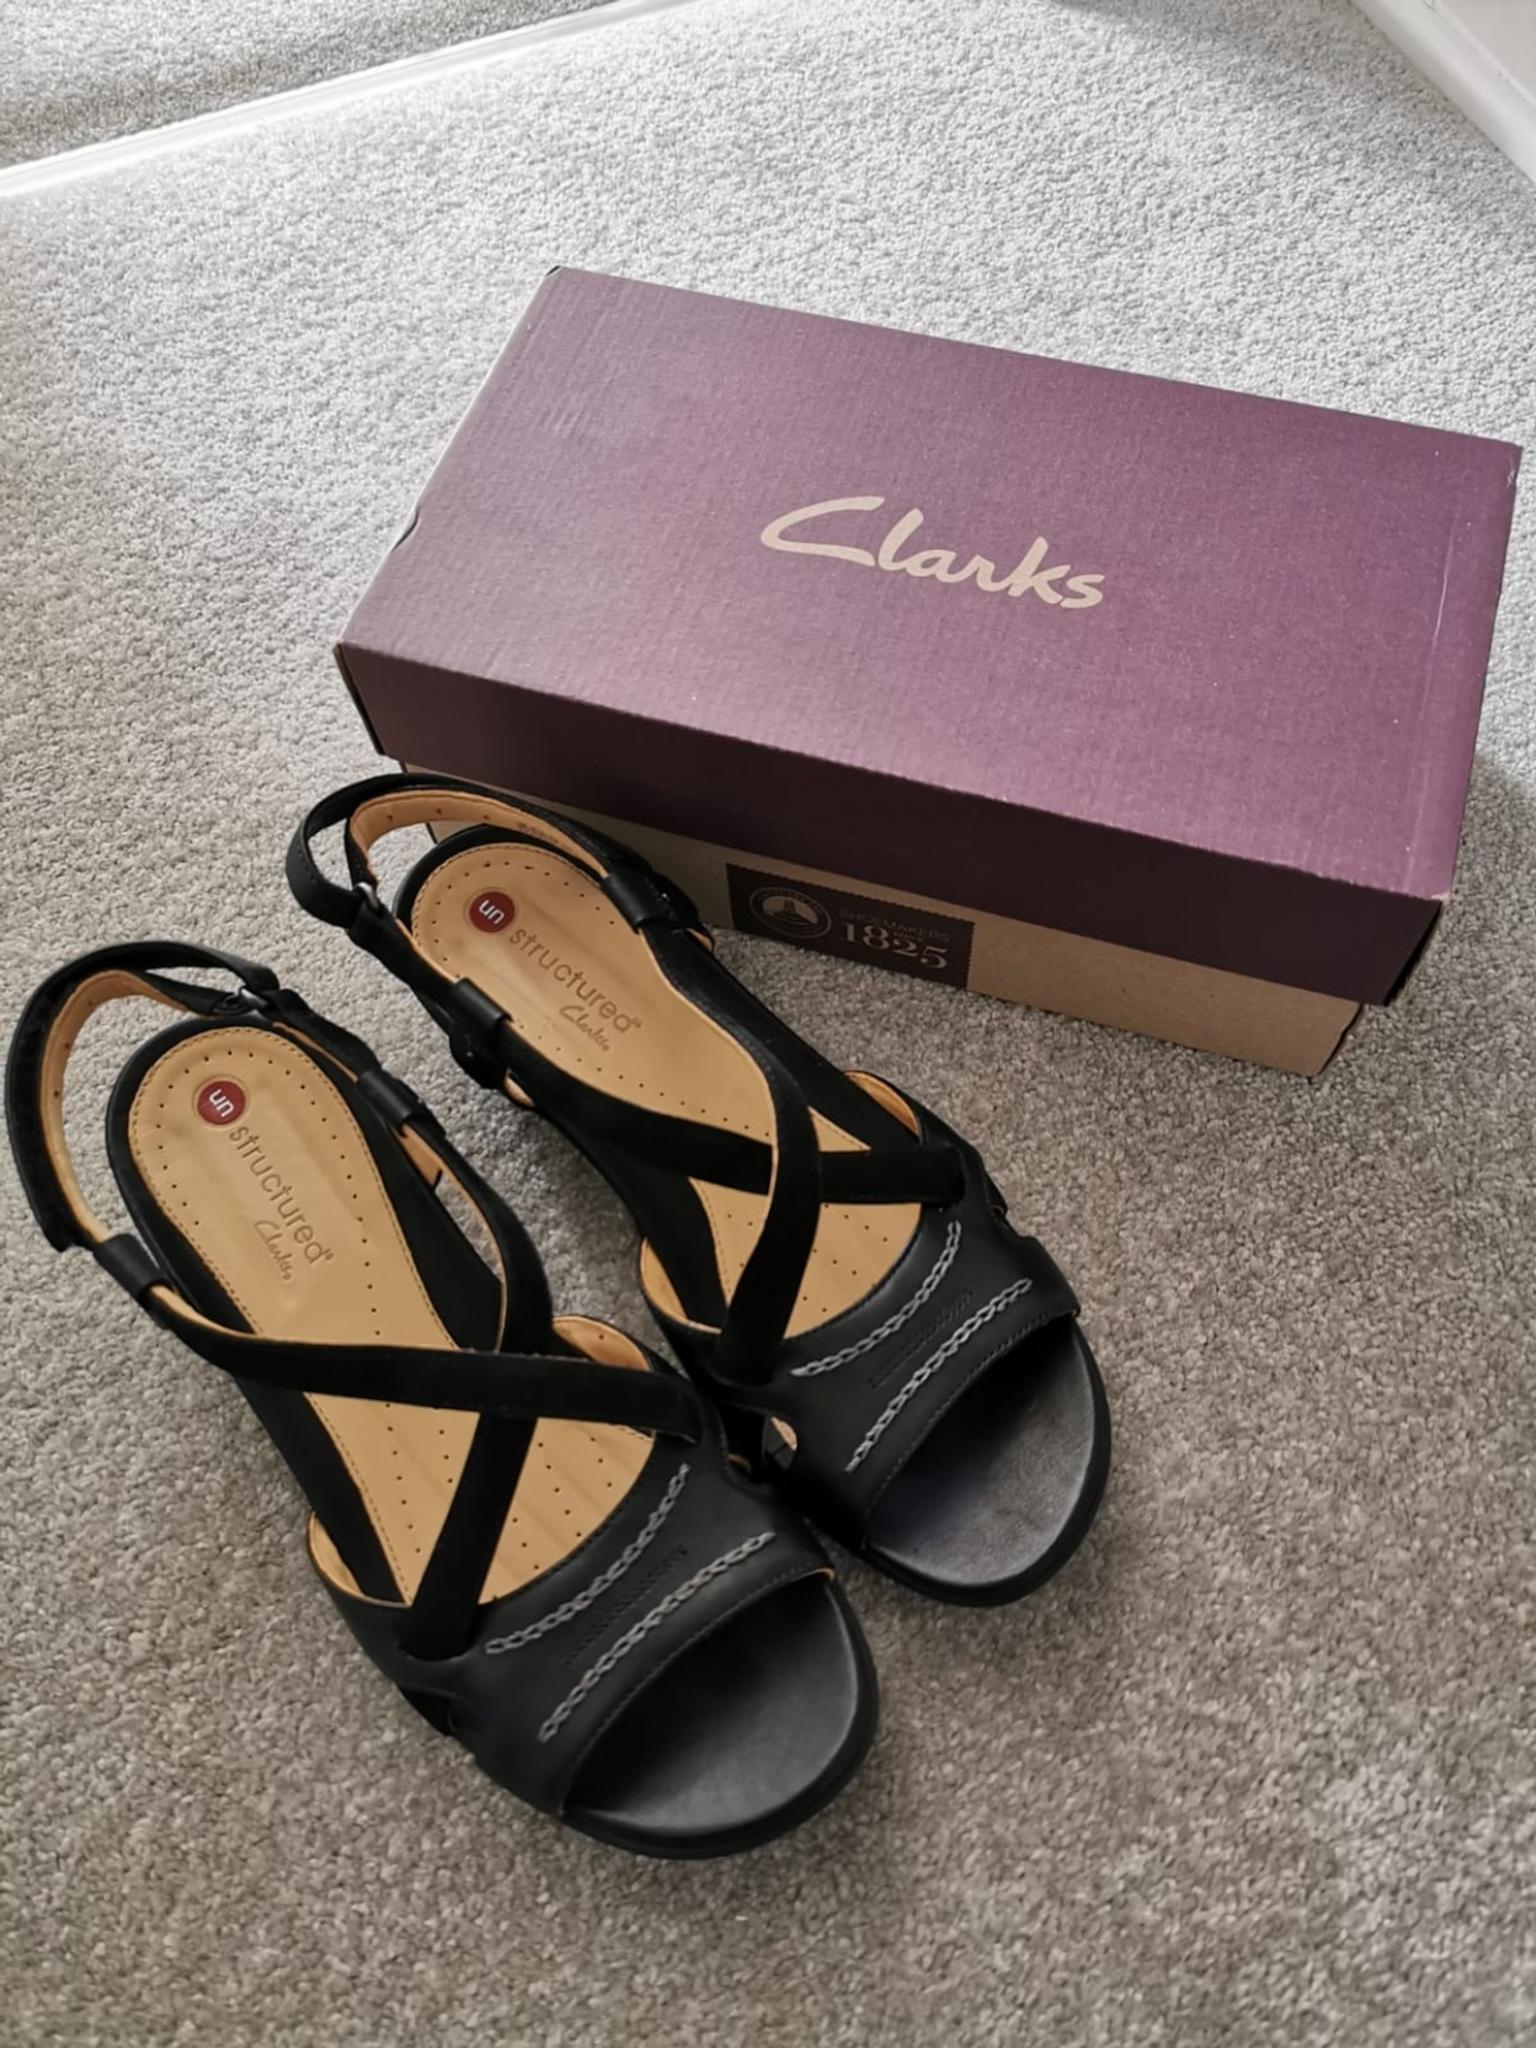 clarks ladies sandals size 5